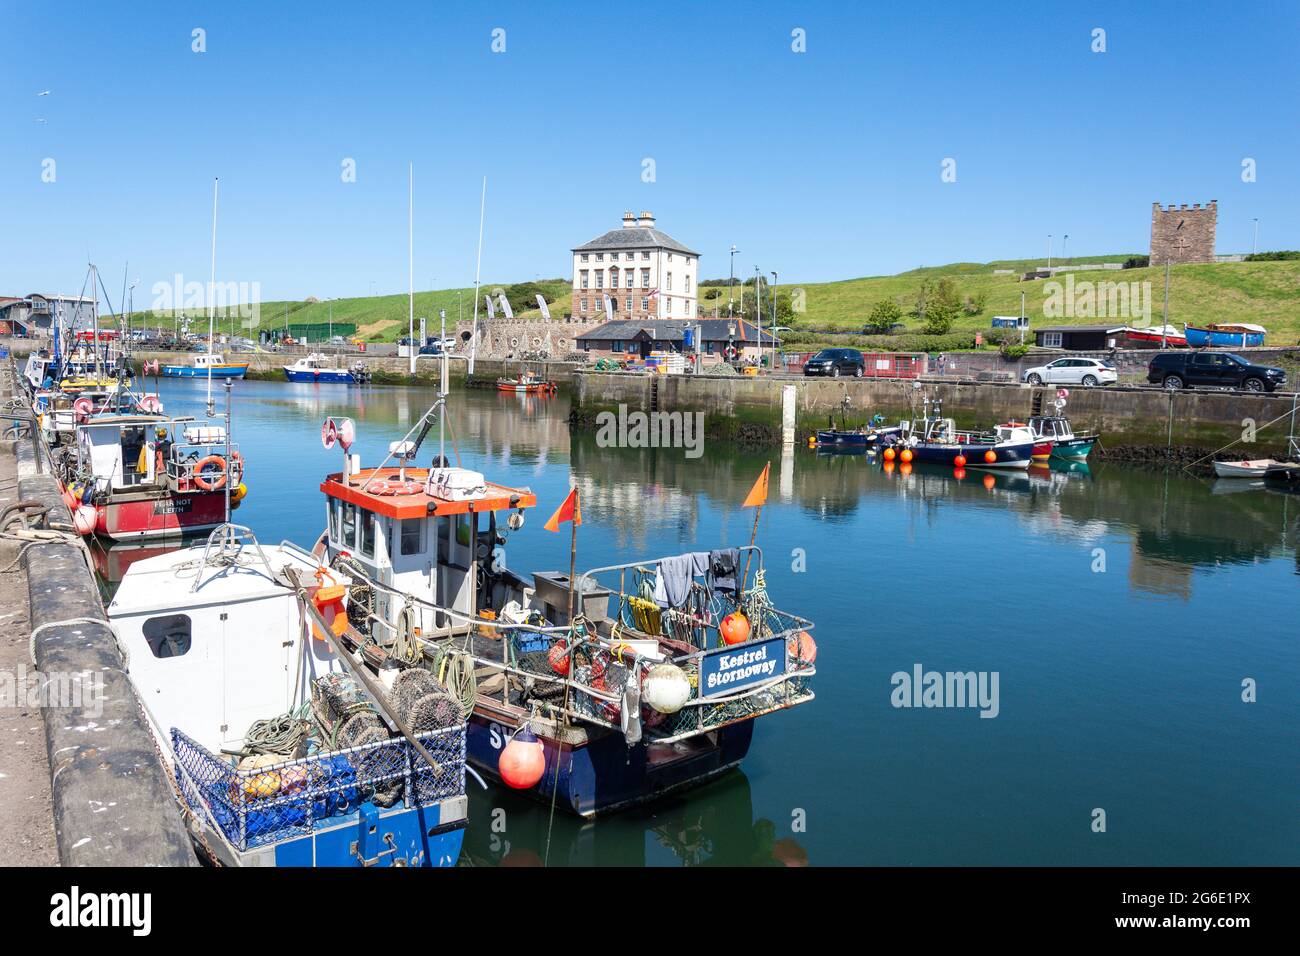 Gunsgreen House e barche da pesca, Gungreen Quay, Eyemouth Harbour, Eyemouth, Scottish Borders, Scozia, Regno Unito Foto Stock